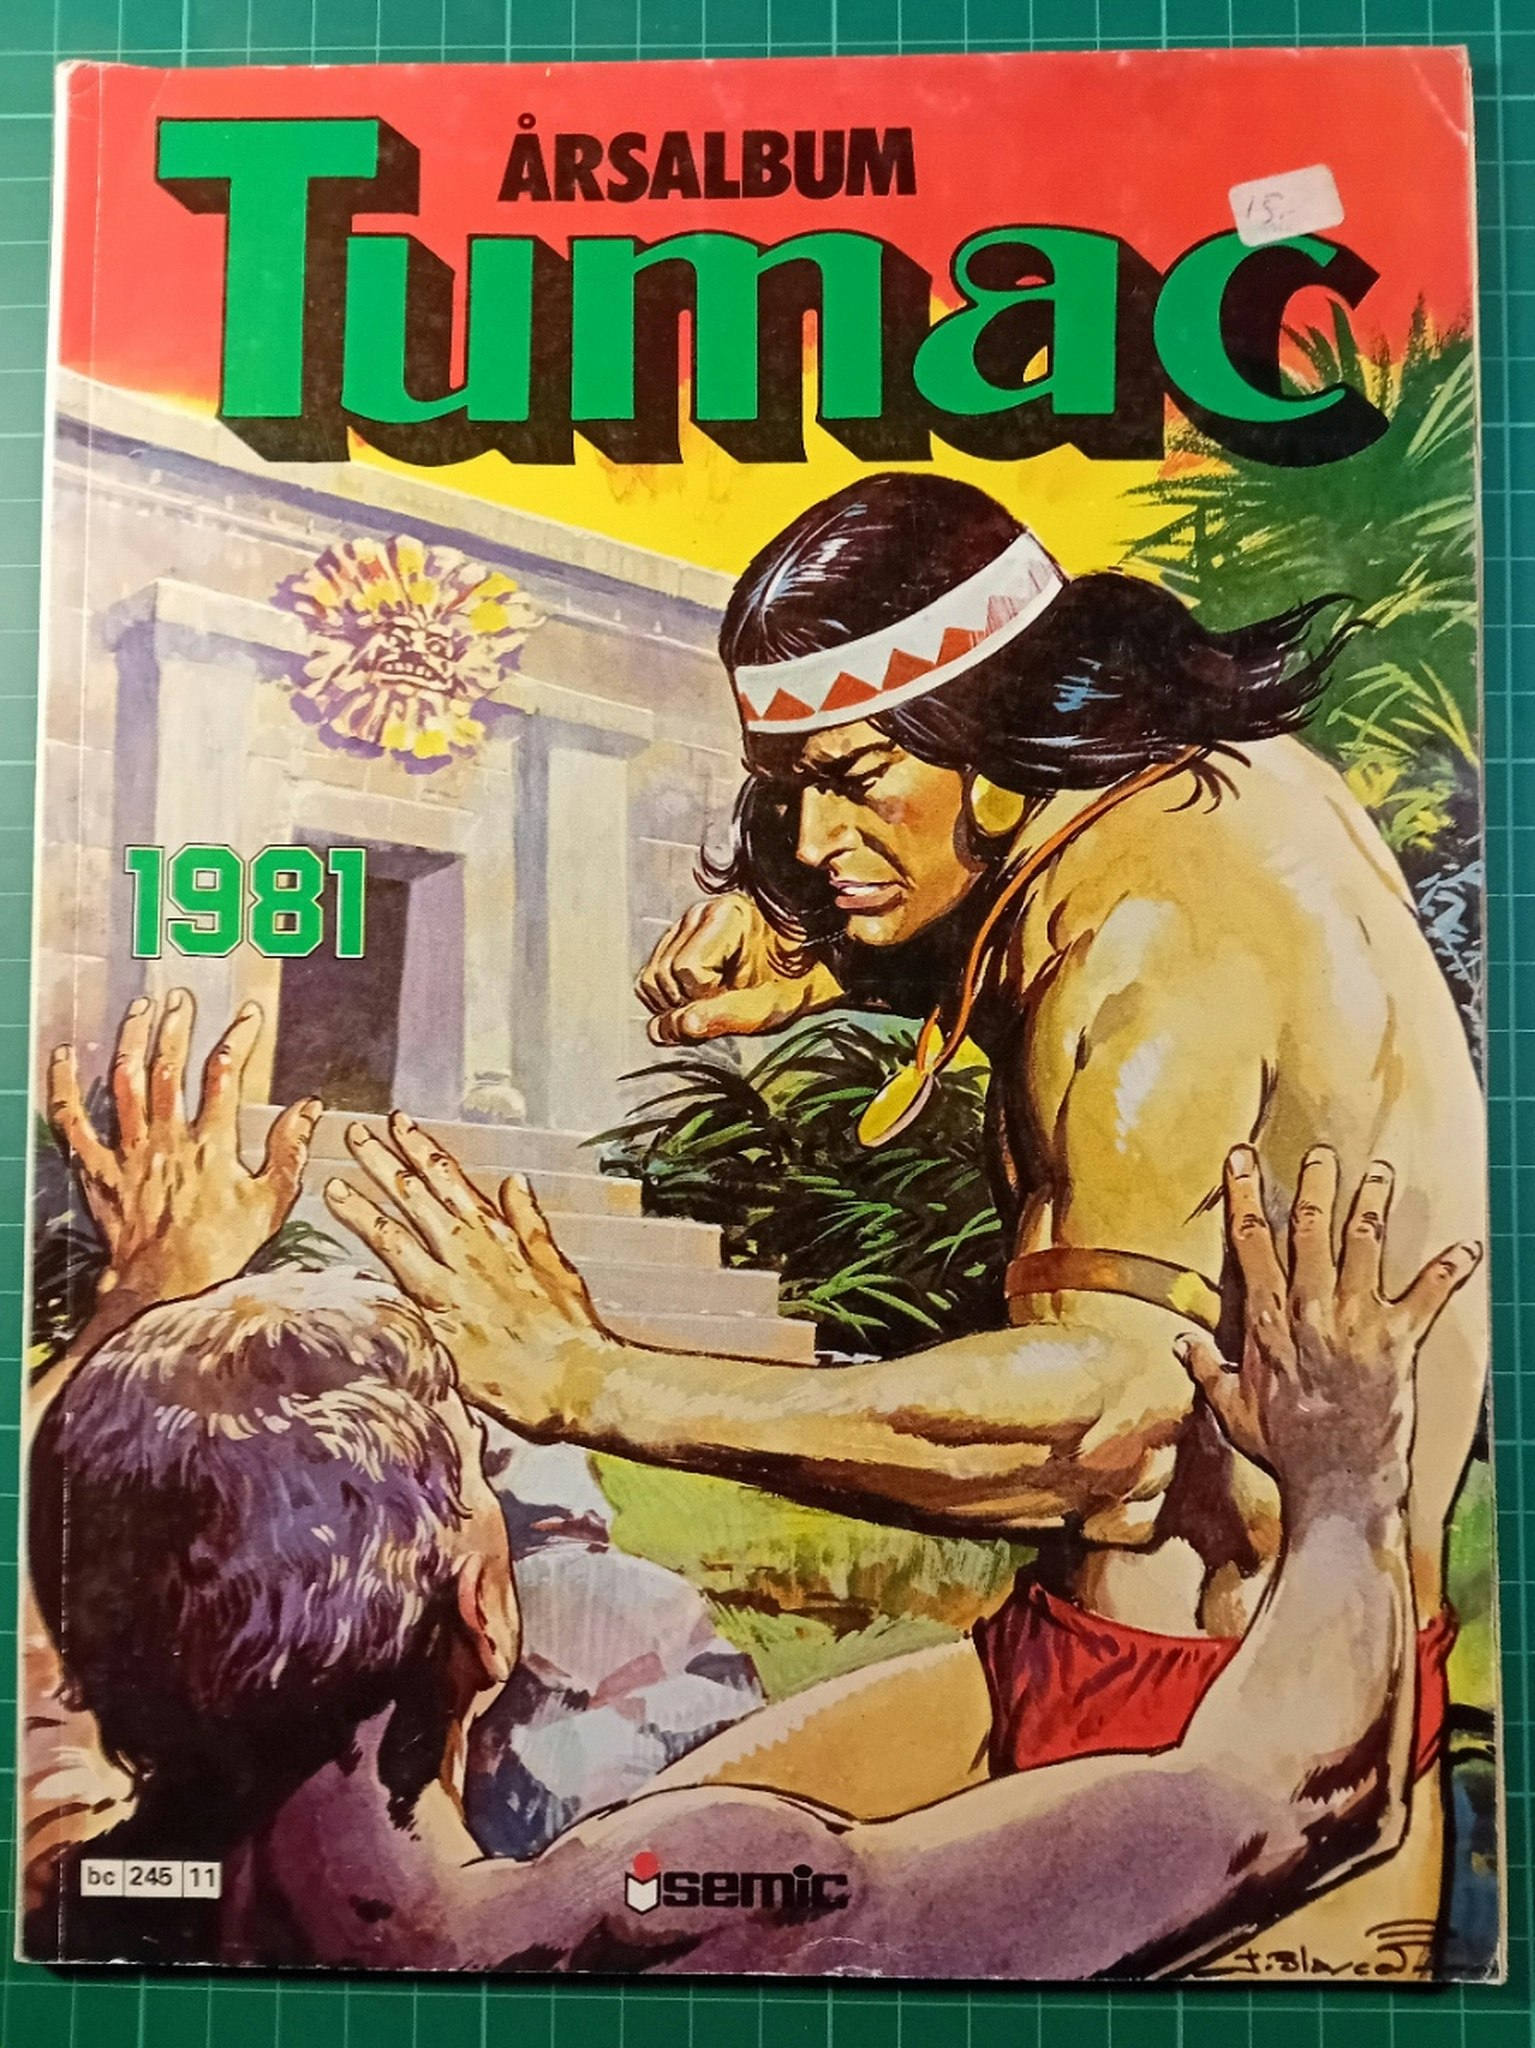 Tumac årsalbum 1981